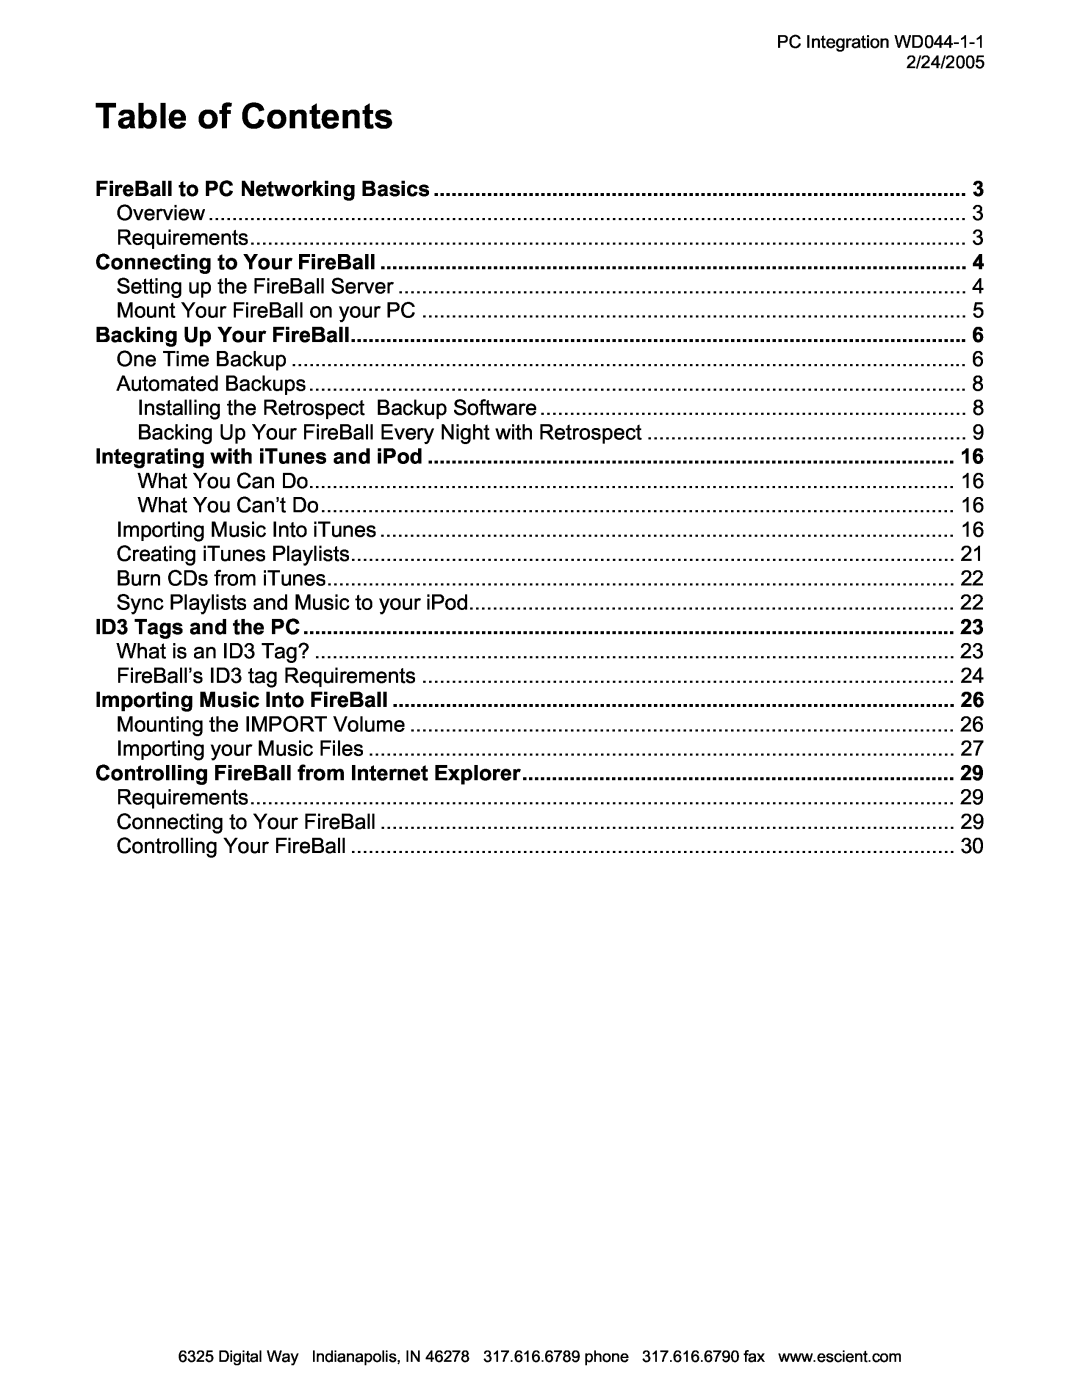 Escient MP-150 manual Table of Contents, PC Integration WD044-1-1, 2/24/2005 